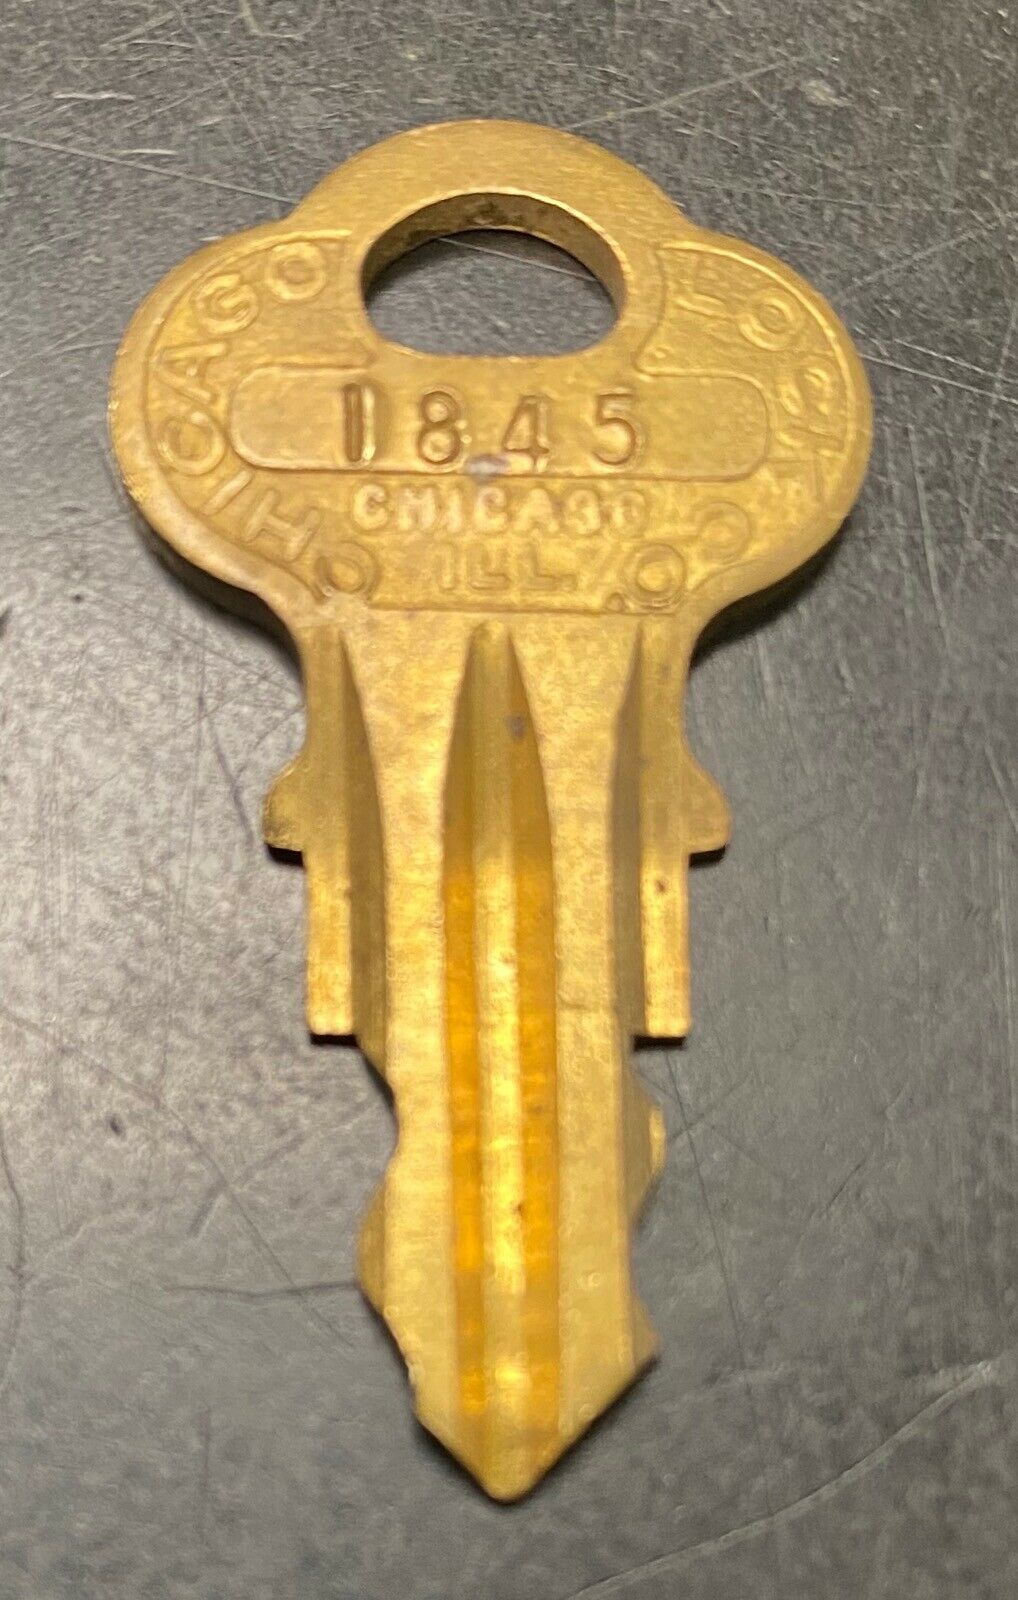 Original Oak Vending Machine Key For Coin-op Lock Peanut Gum Ball